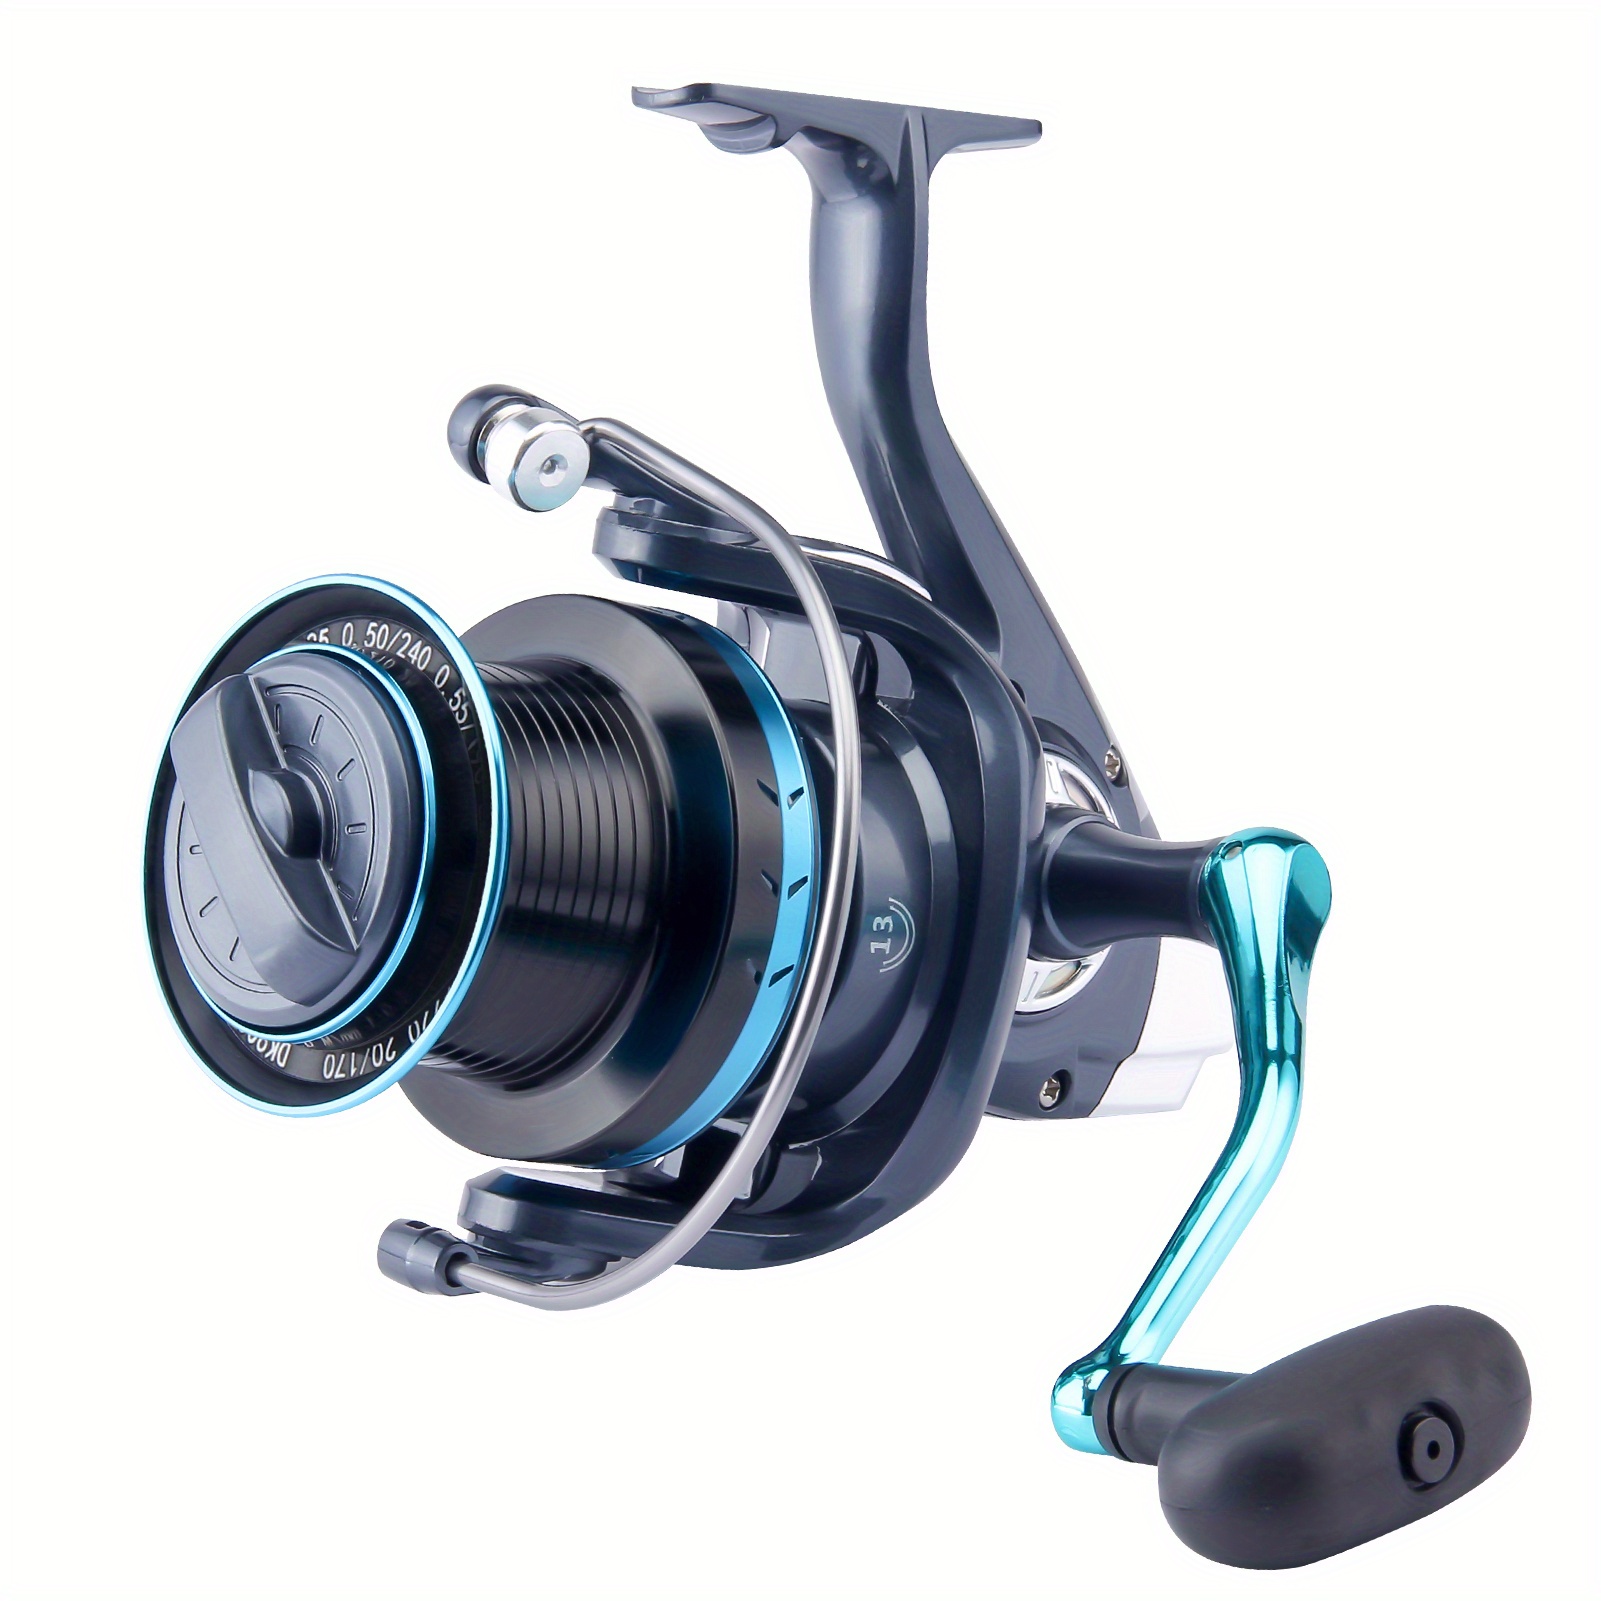 Haojia FW4000 Open Face Fishing Reel - Blue & Black - NIB